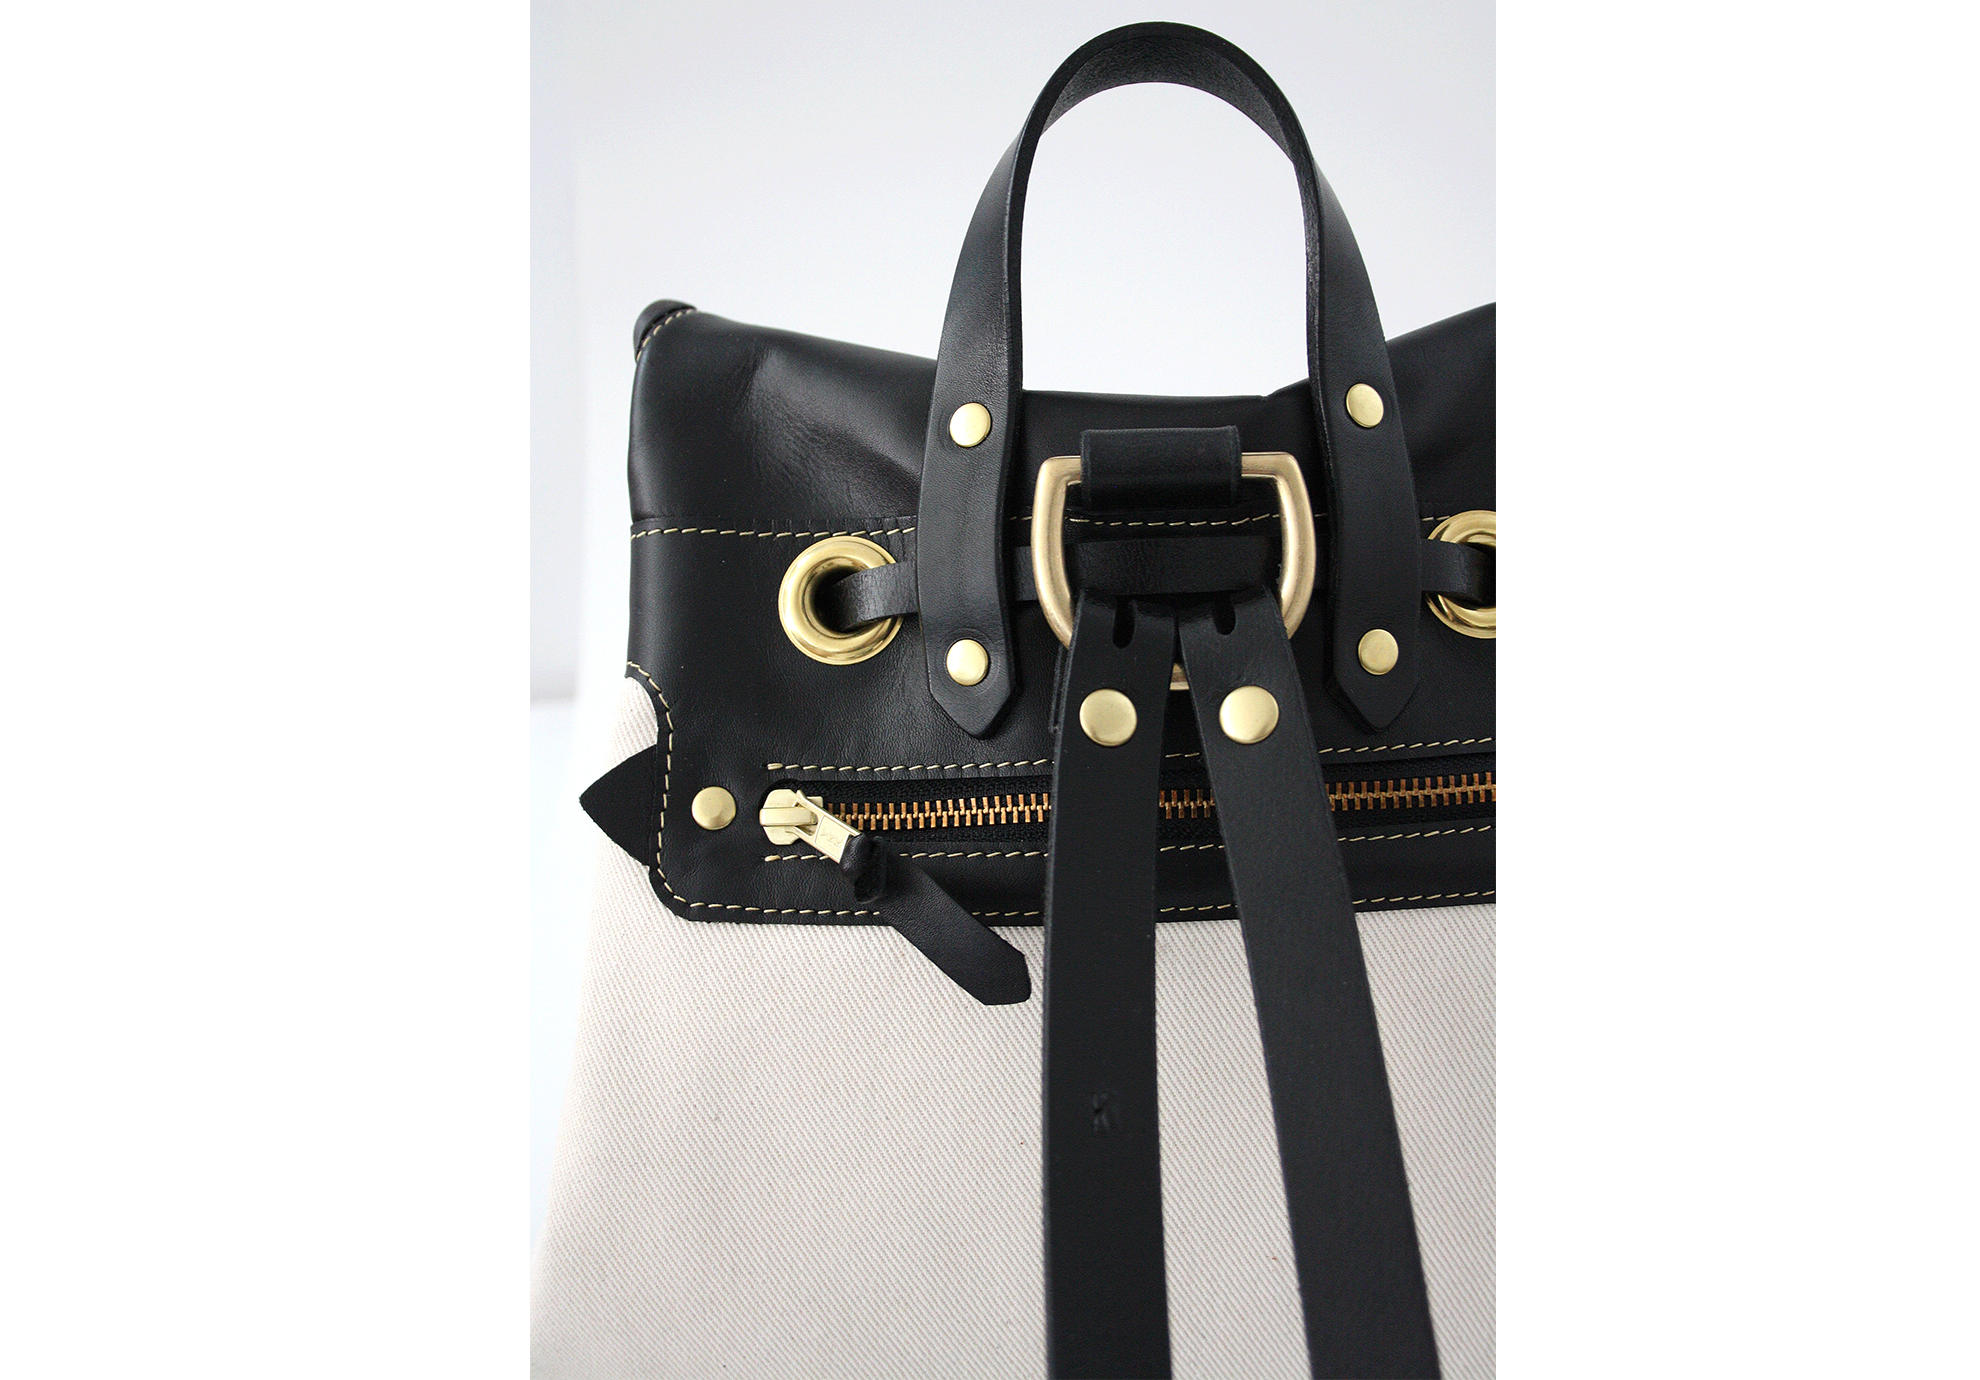 leather goods backpack handmade in canada quebec MTL By designer Kim Fletcher